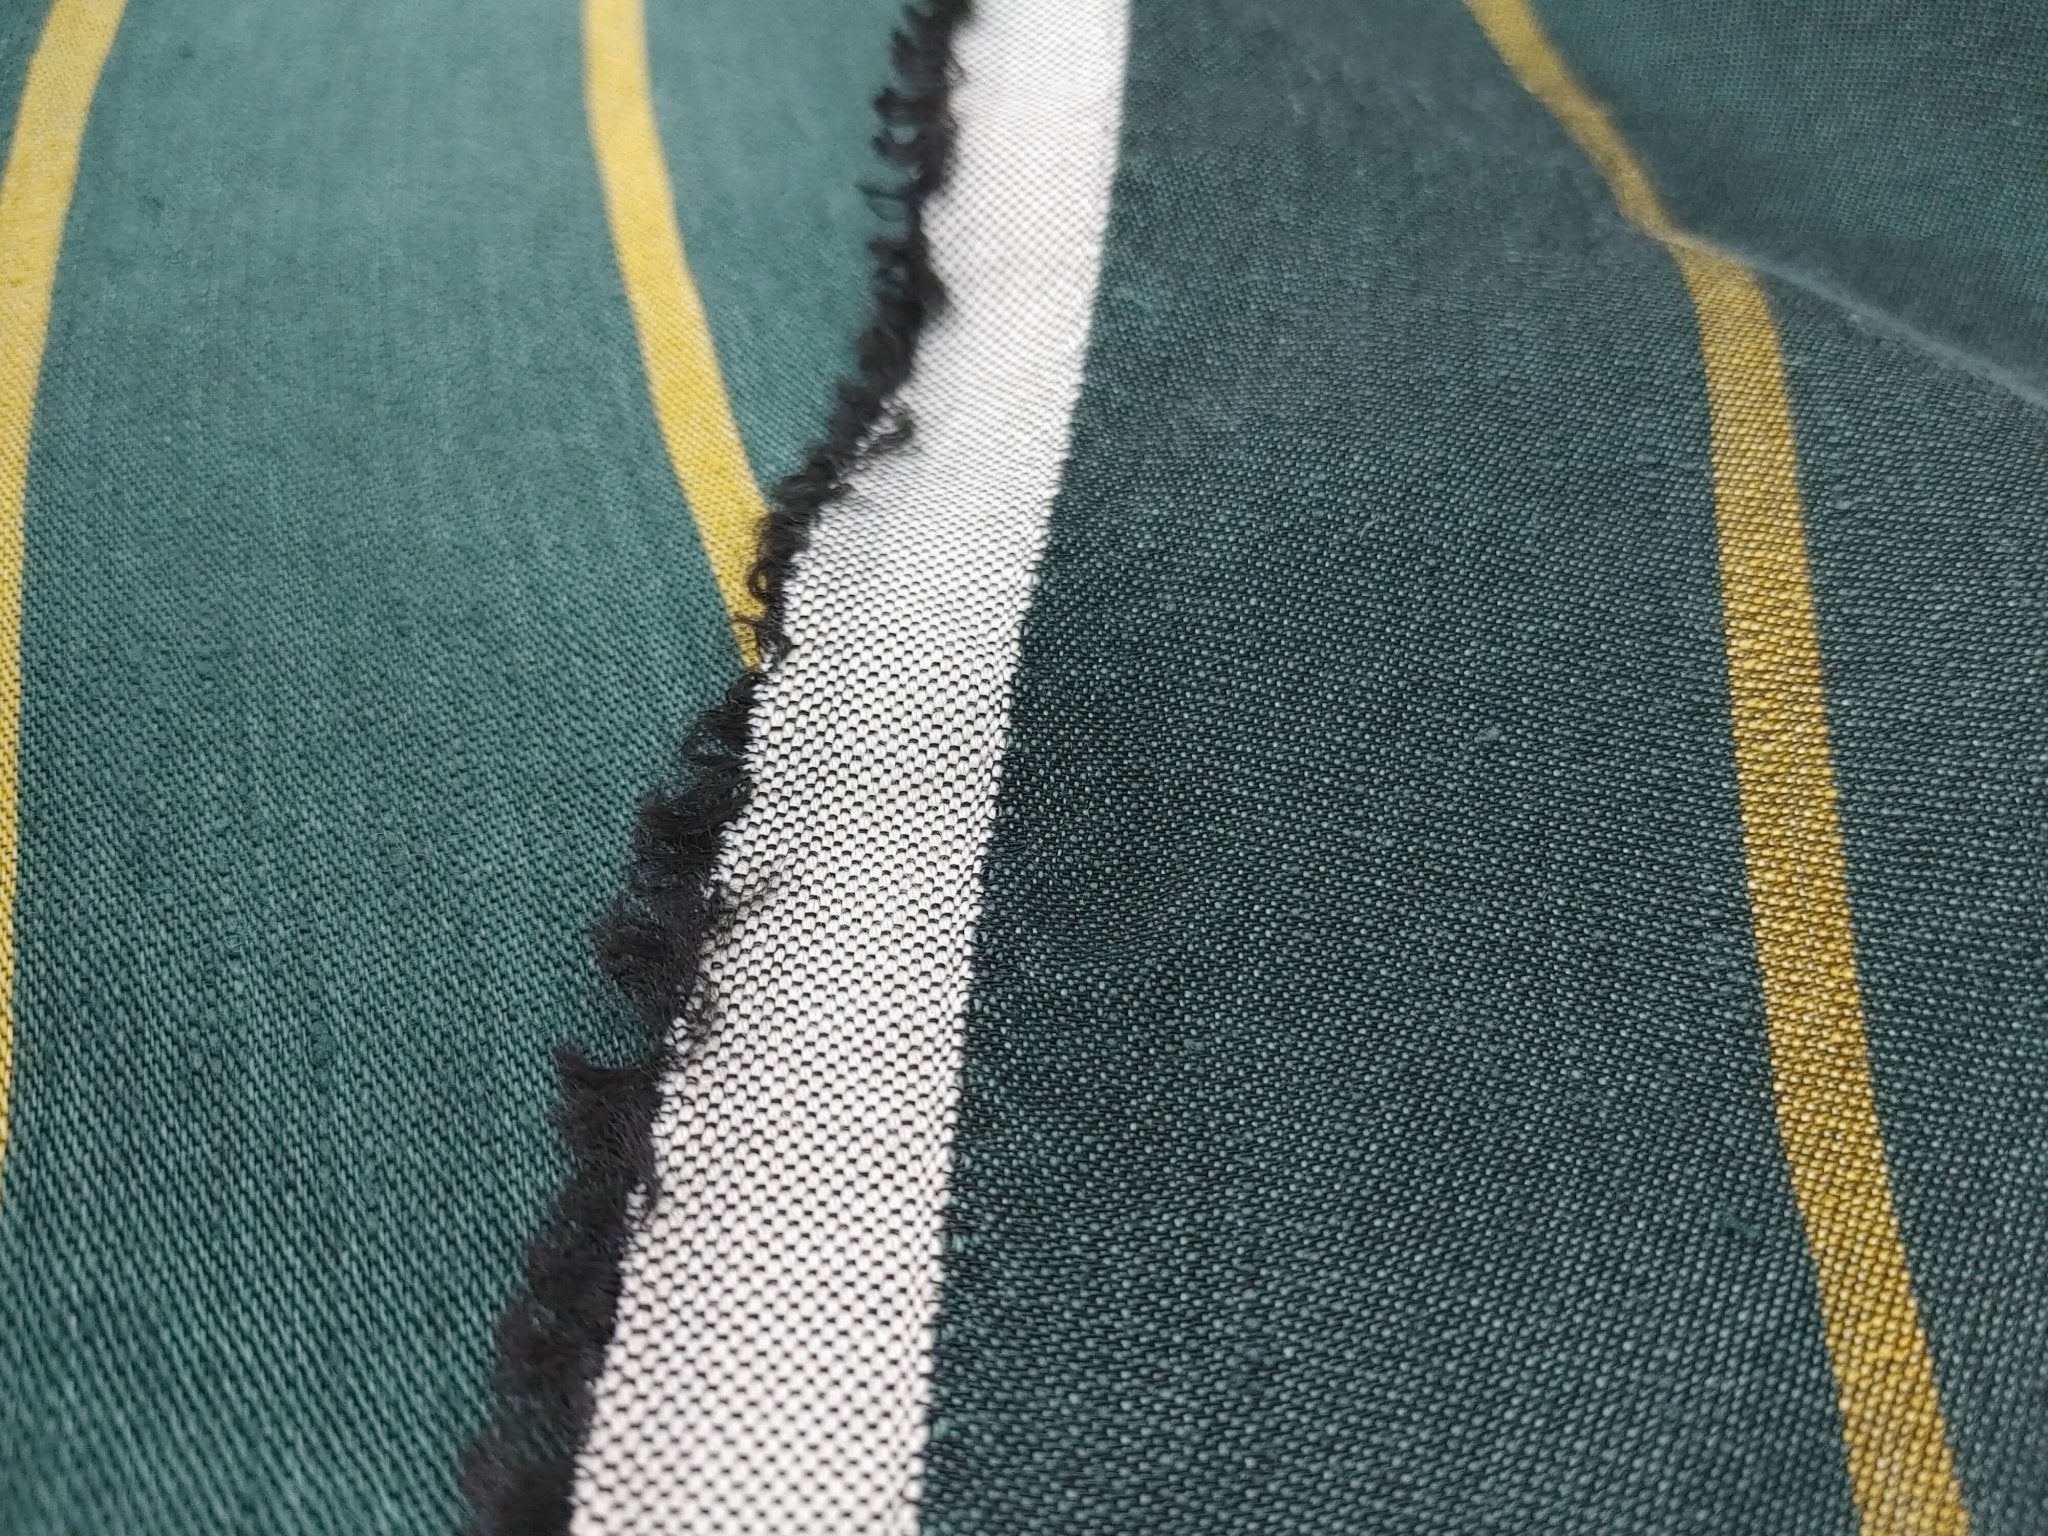 Linen Rayon Satin Stripe Fabric 6567 6568 - The Linen Lab - Green